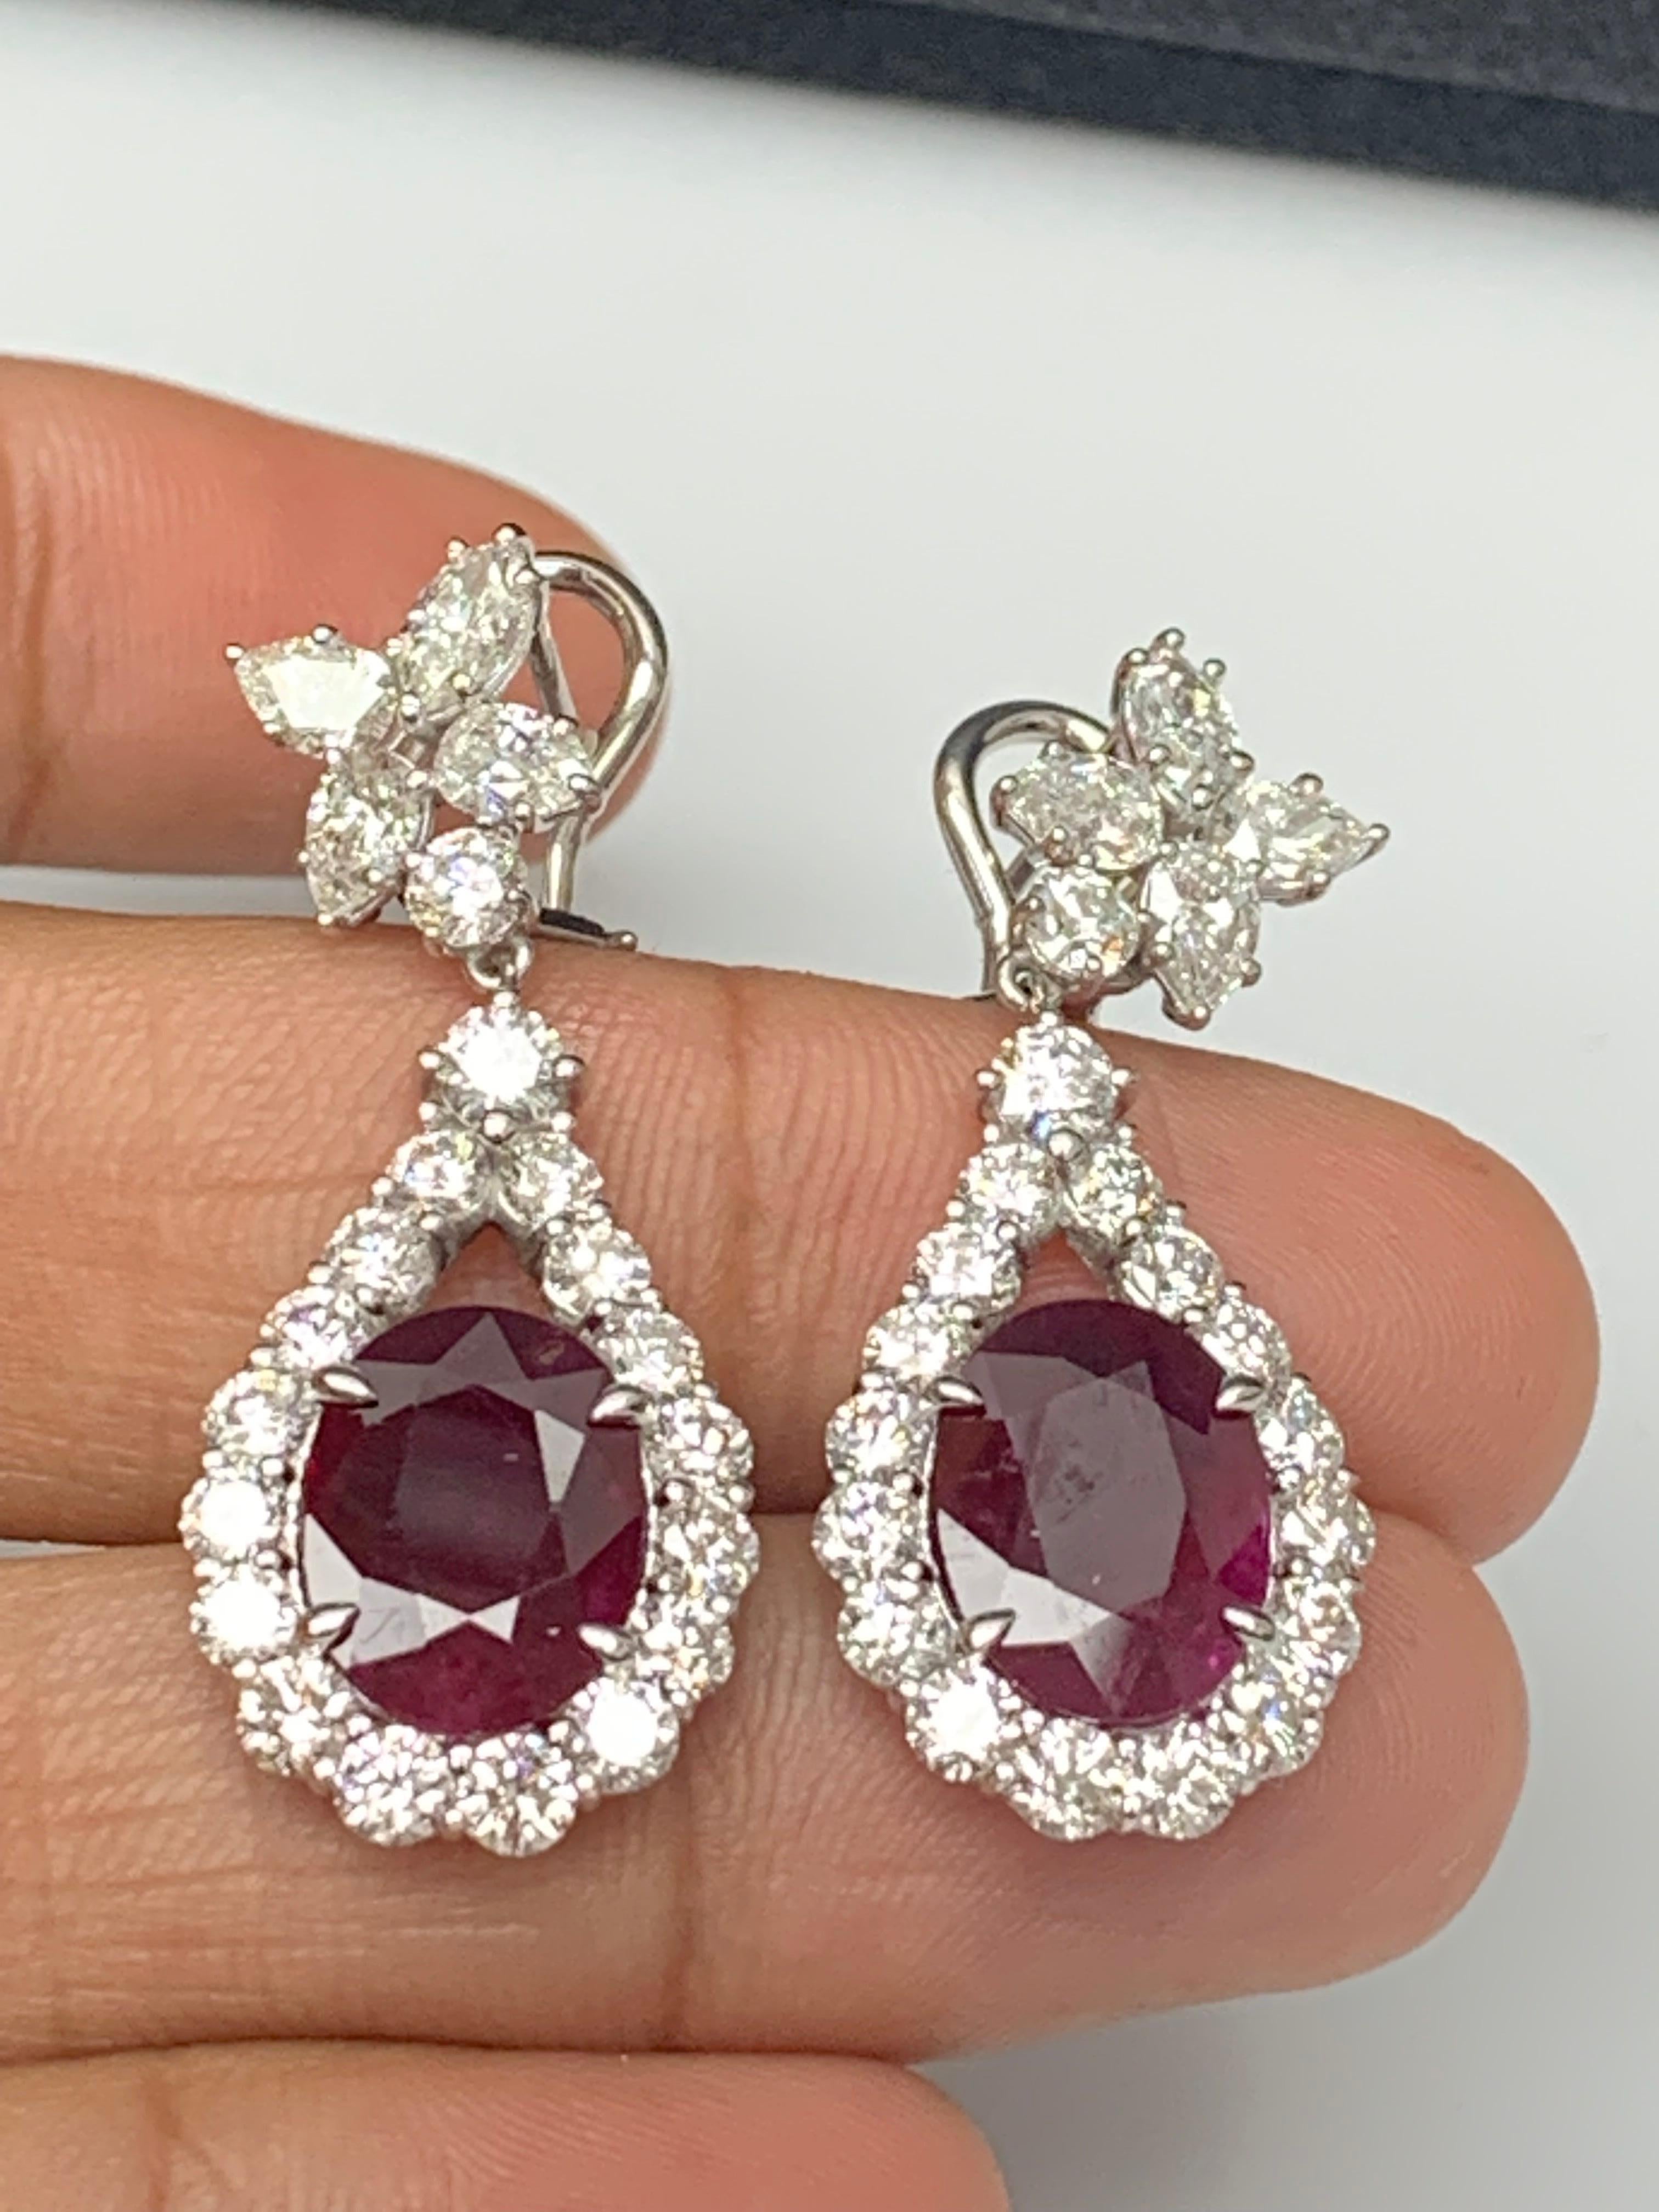 Women's Certified 9.05 Carat Burma Ruby and Diamond Drop Earrings in 18K White Gold For Sale